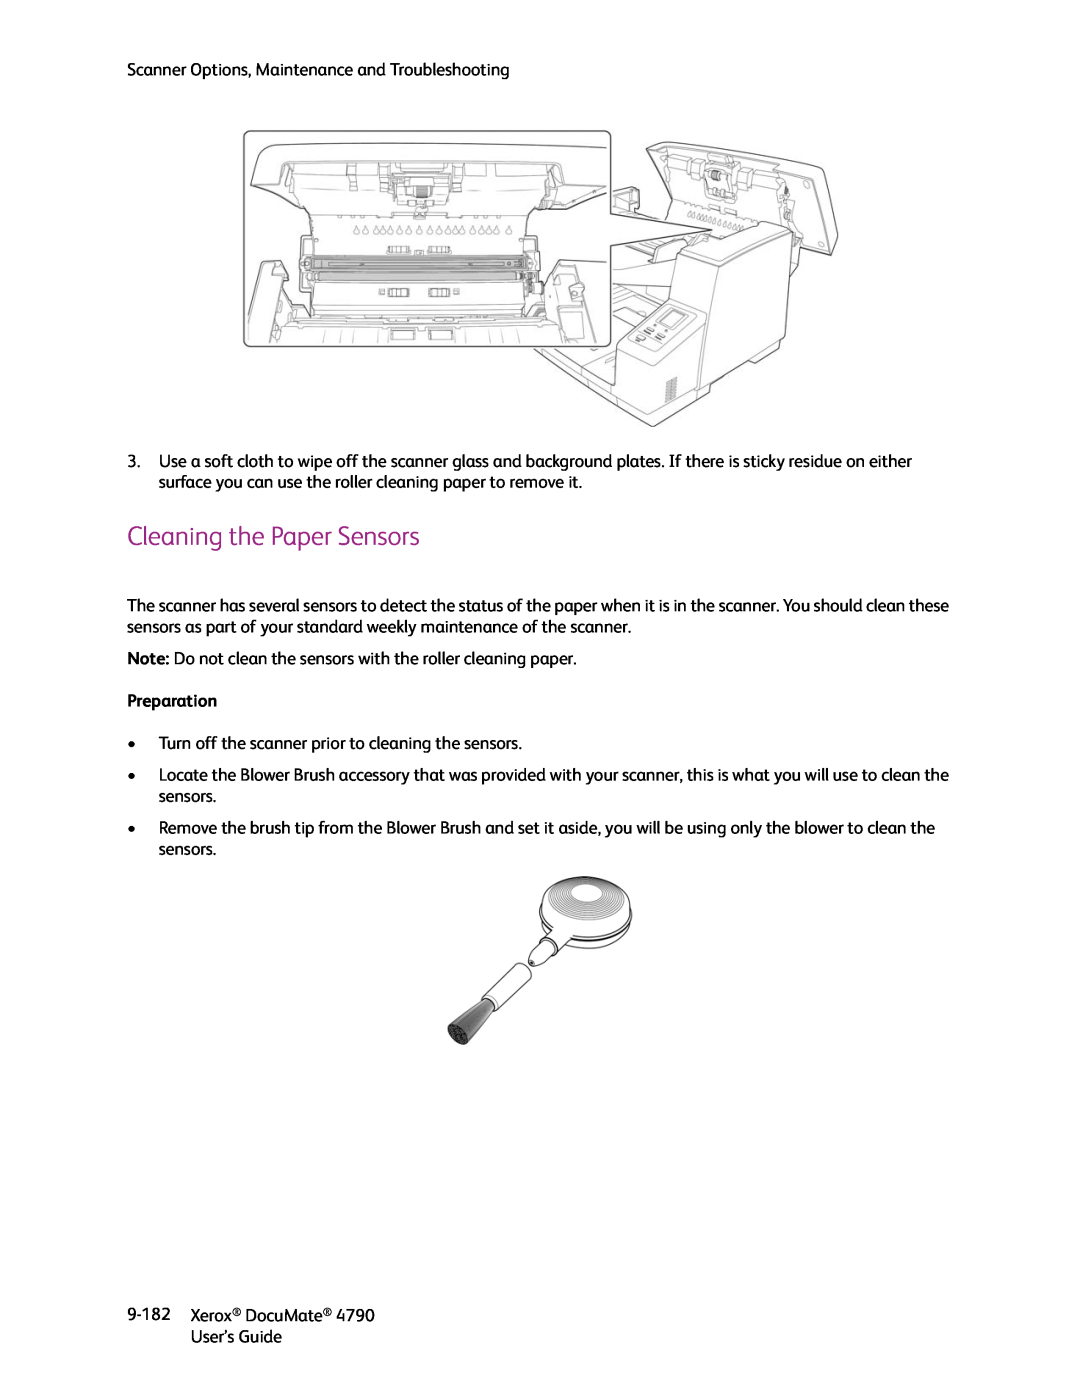 Xerox xerox documate manual Cleaning the Paper Sensors, Preparation 